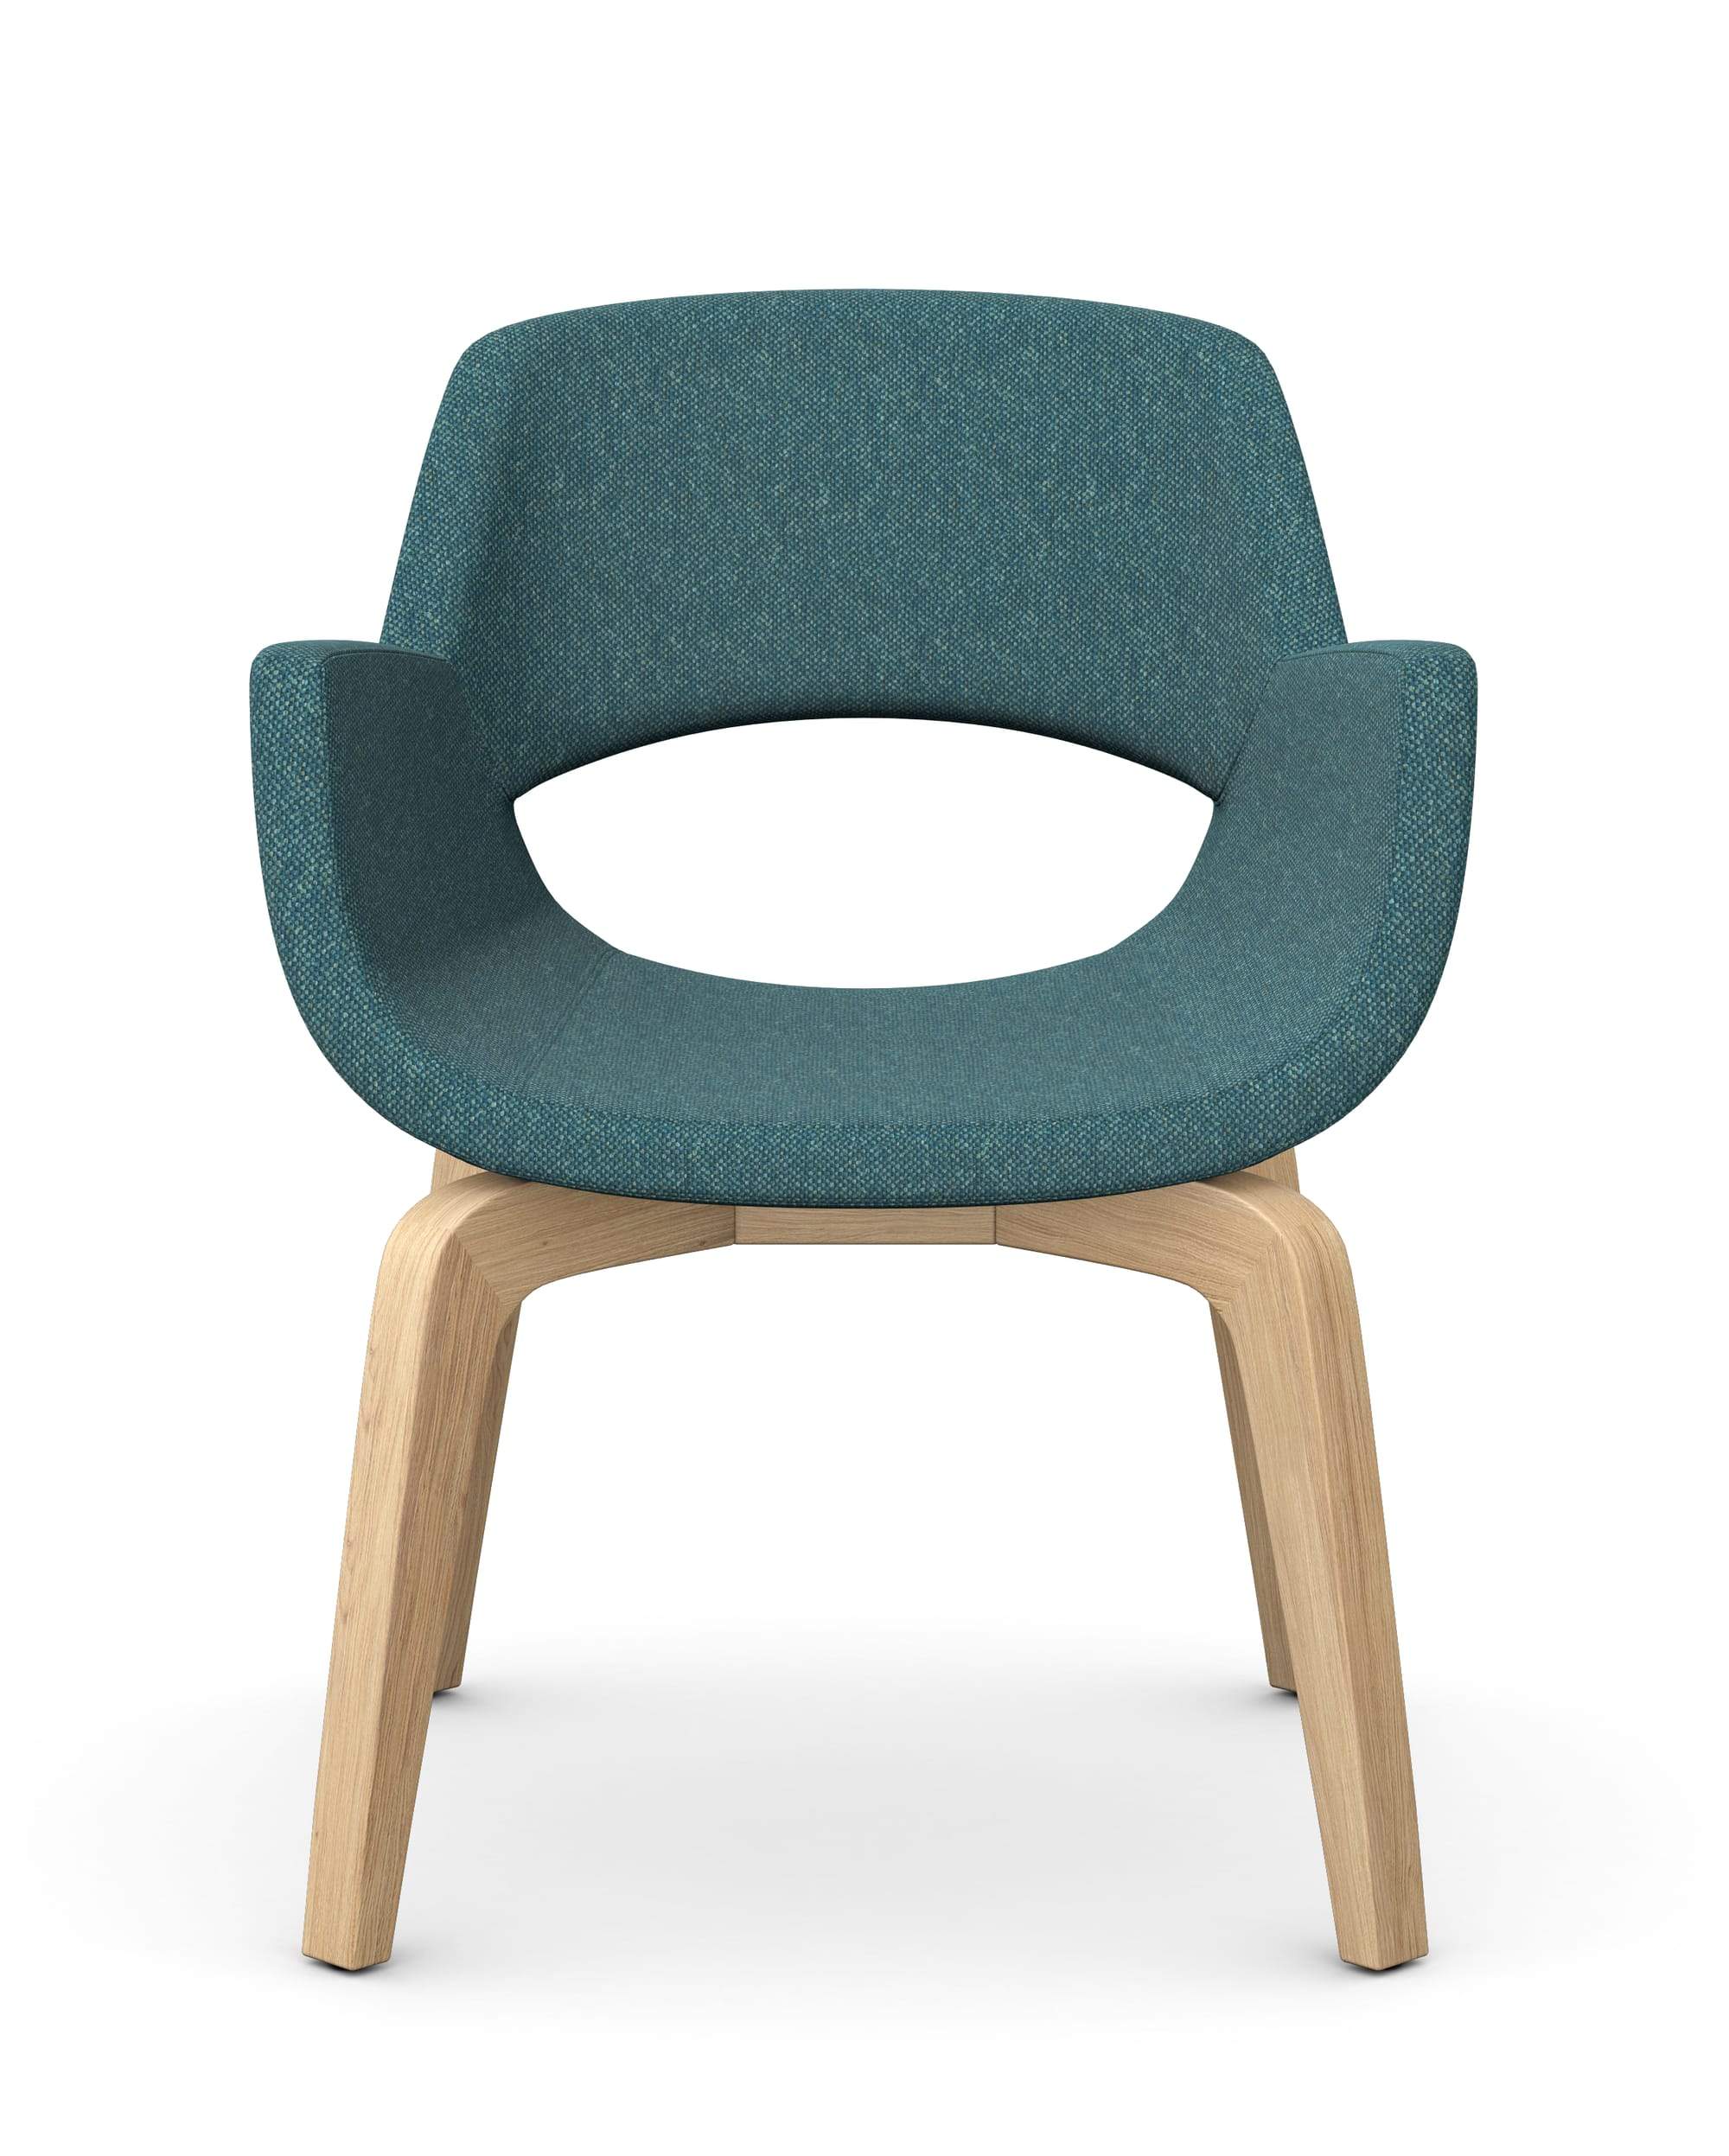 FIELDER - Chair, Curved Wooden Legs